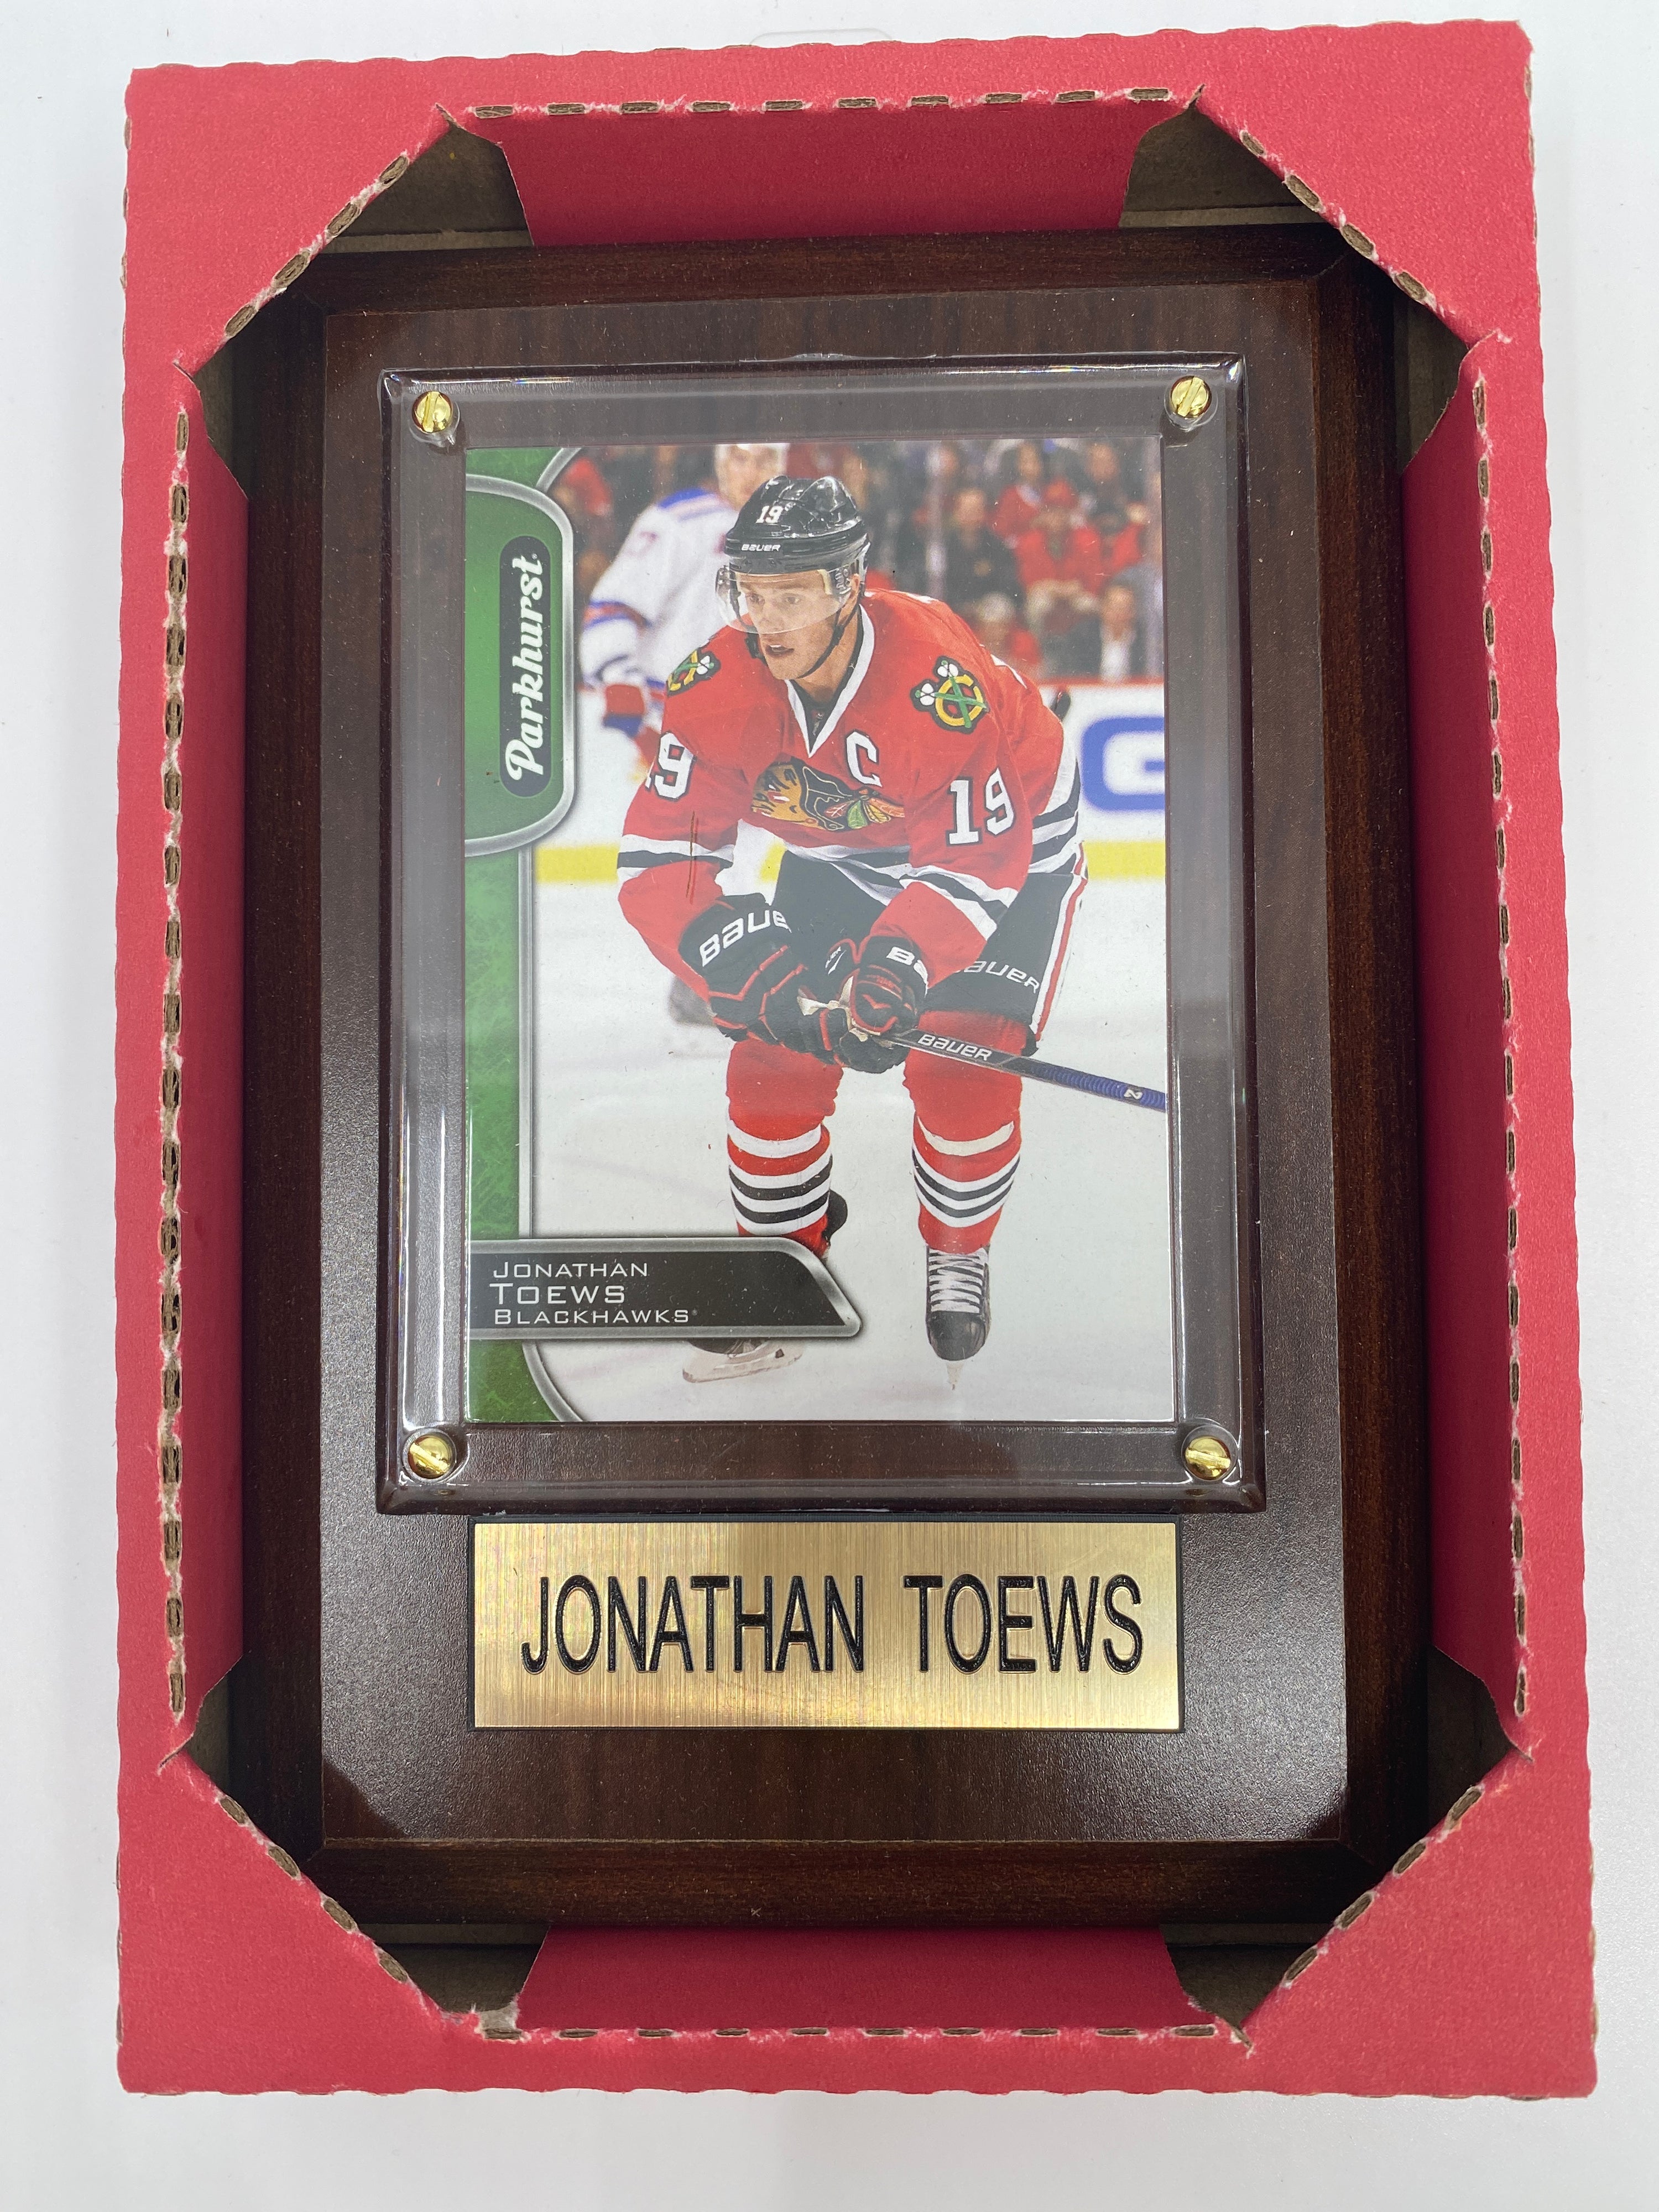 NHL Plaque with card 4x6 Hawks Jonathan Toews